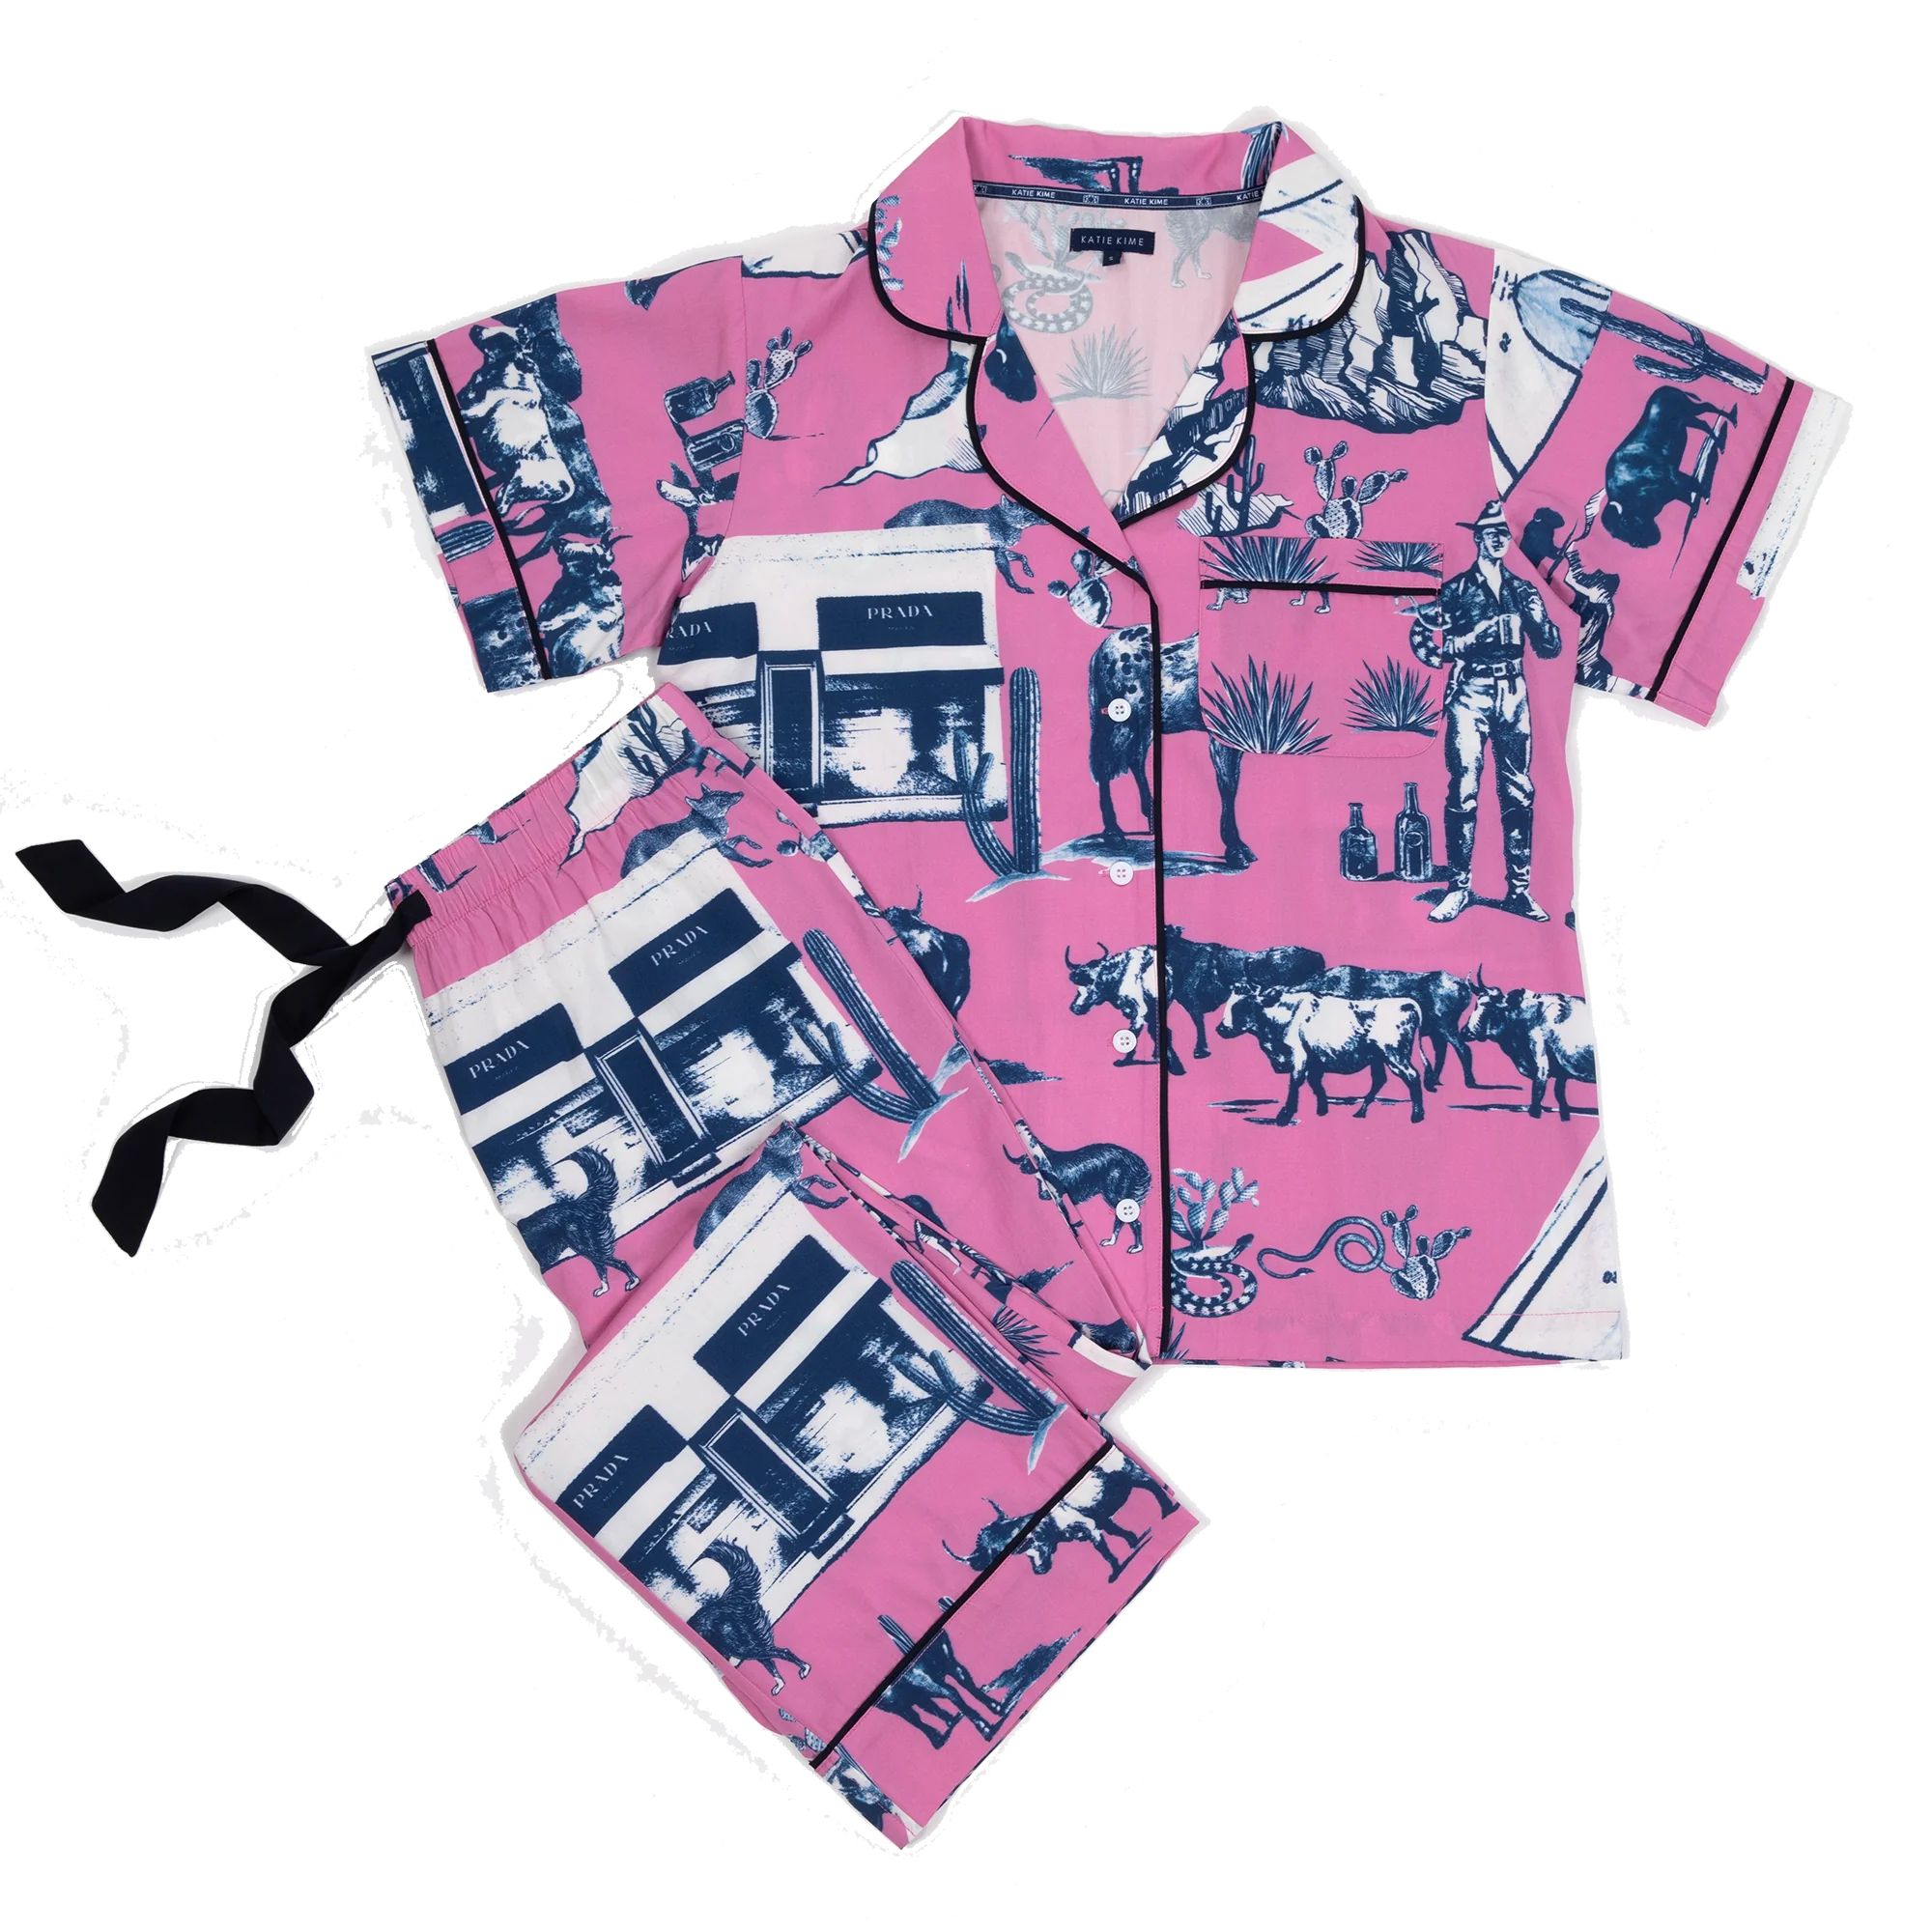 Marfa Toile Pajama Pants Set | Colorful Prints, Wallpaper, Pajamas, Home Decor, & More | Katie Kime Inc